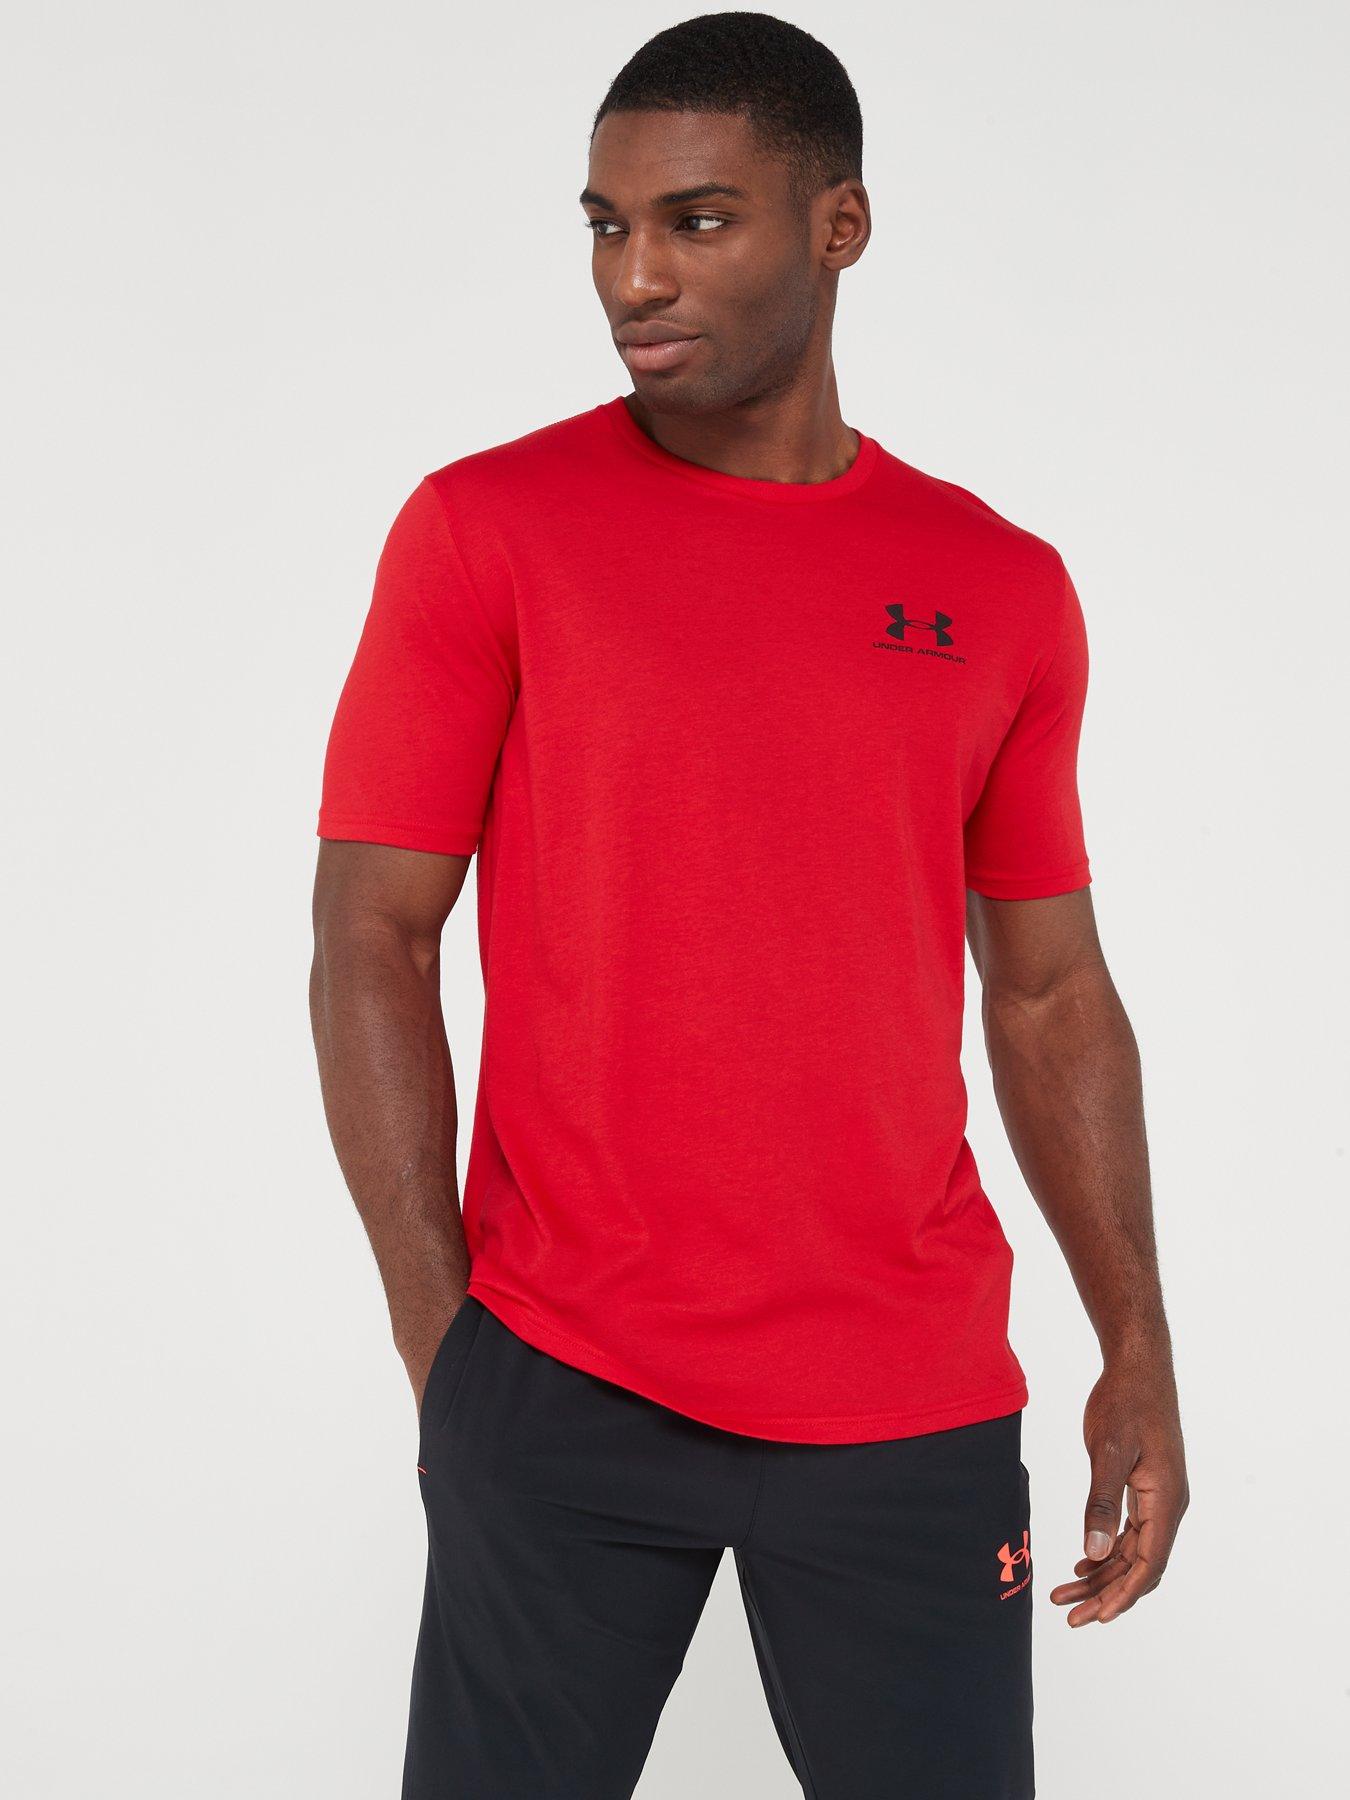 https://media.very.co.uk/i/very/QHYLD_SQ1_0000000017_RED_MDf/under-armour-trainingnbspsportstyle-left-chest-logo-t-shirt-red.jpg?$180x240_retinamobilex2$